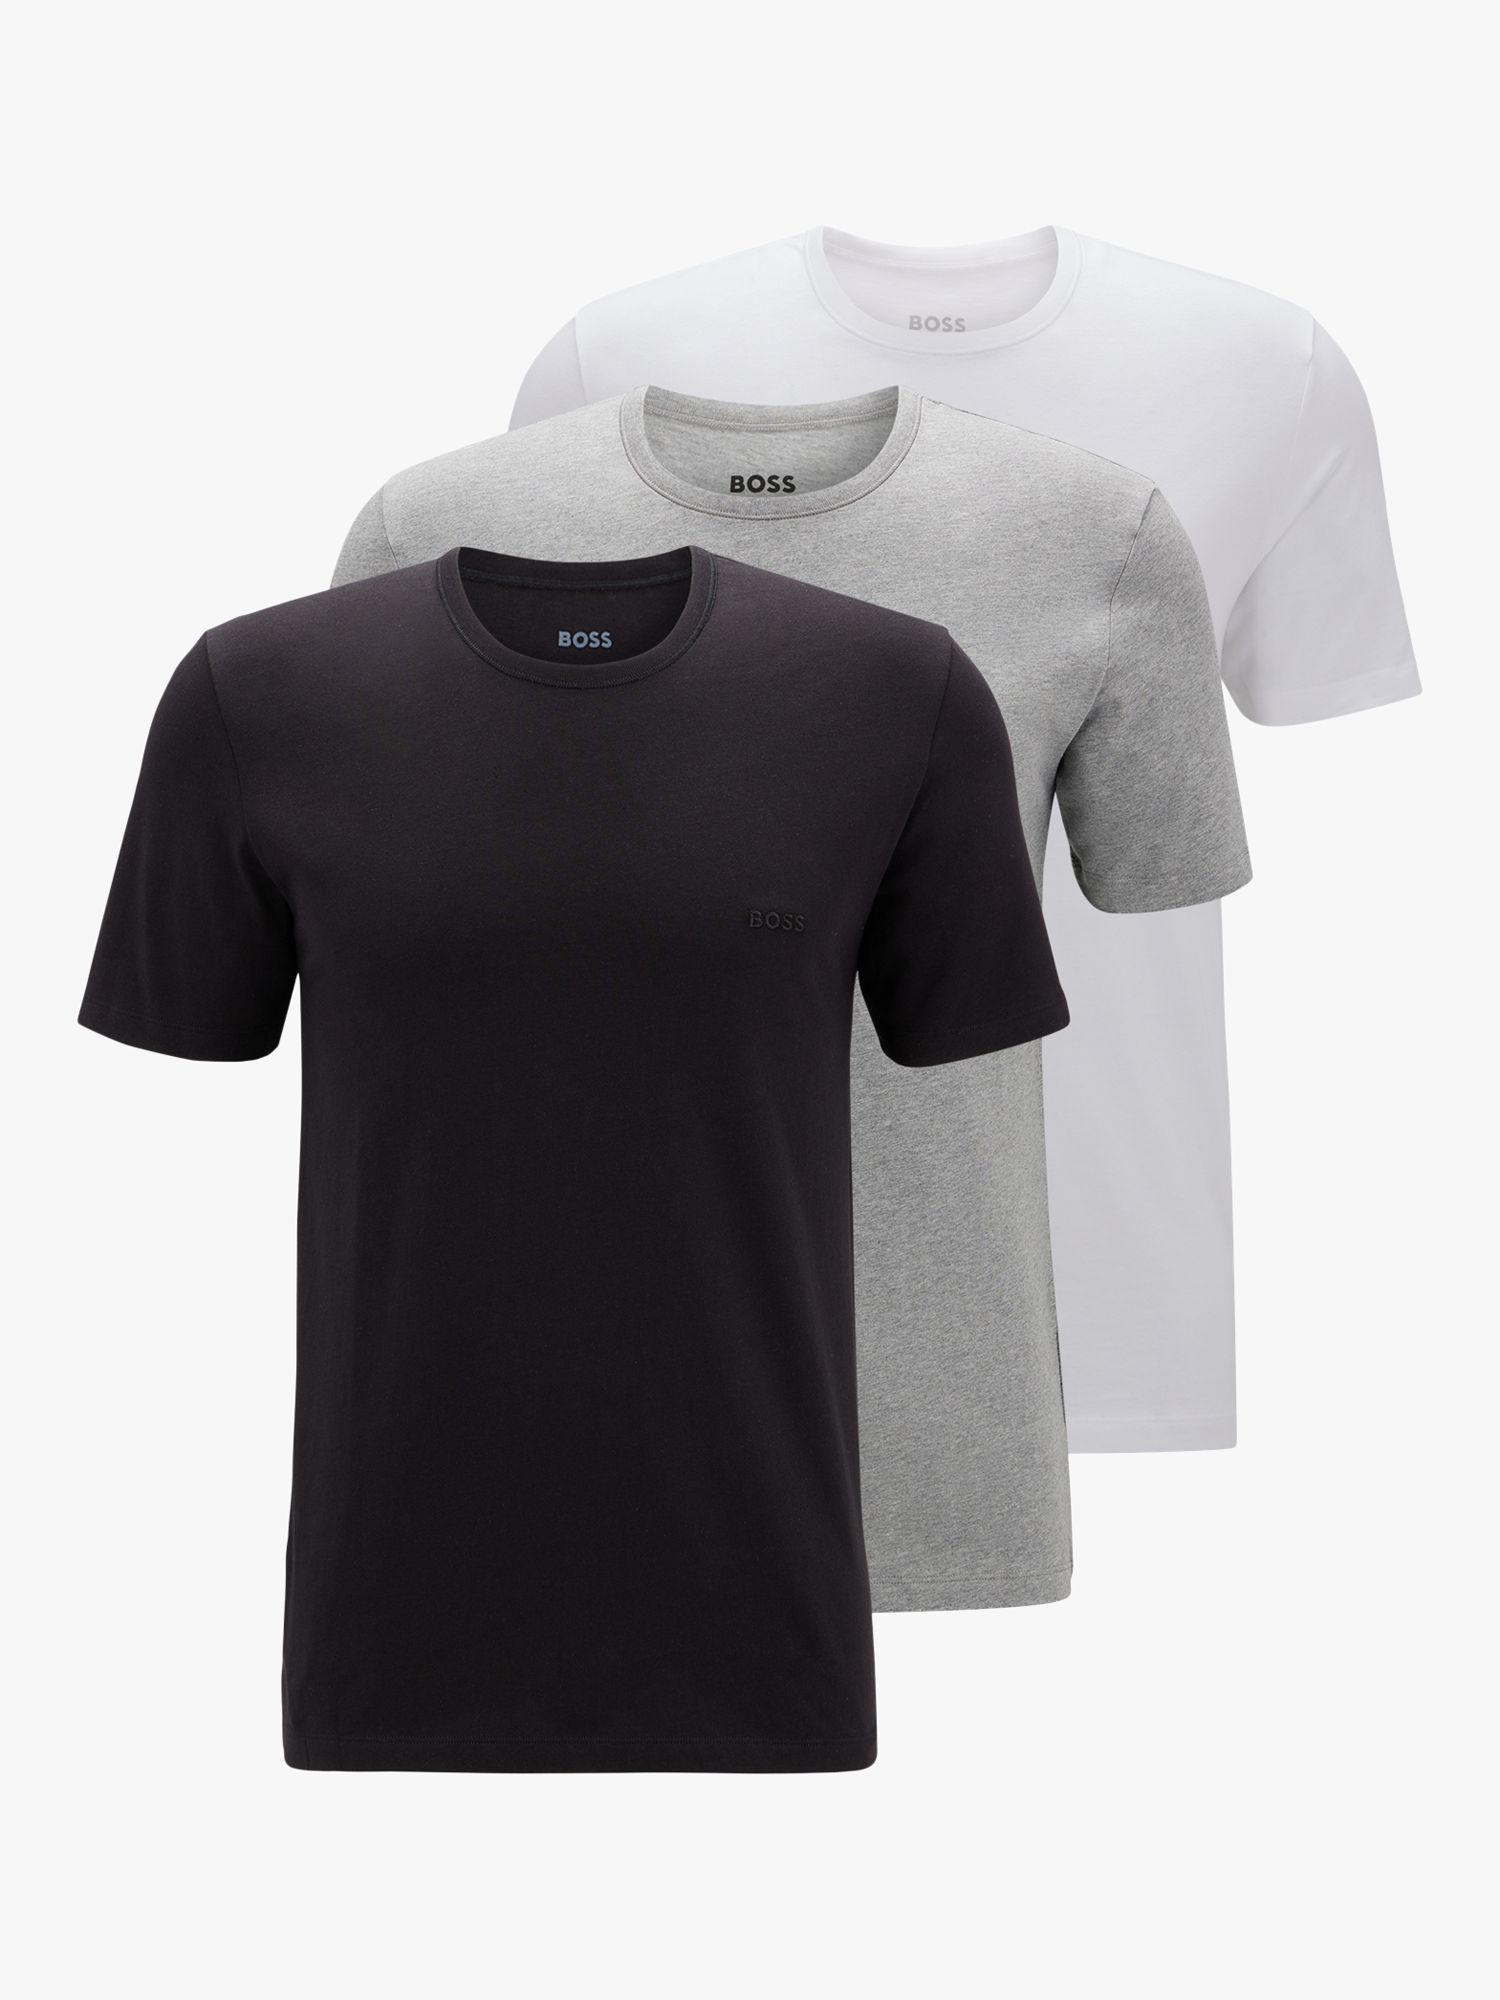 BOSS Cotton Crew Neck Lounge T-Shirts, Pack of 3, Black/Grey/White at John  Lewis & Partners